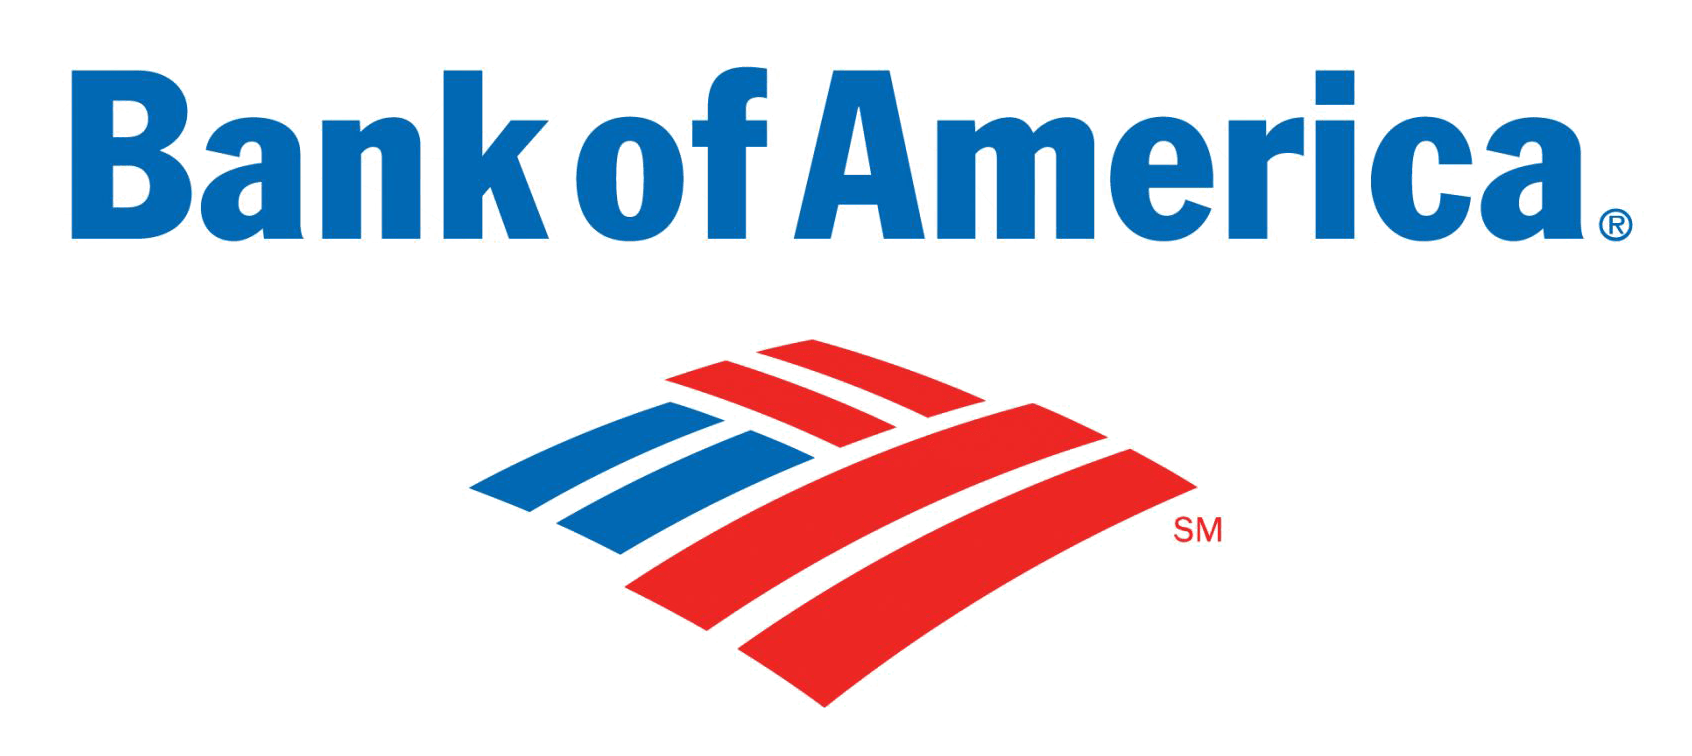 Bank of America Home Loans Logo - Bank of America Home Loans – Annual Sponsor | Real Estate Marketing ...